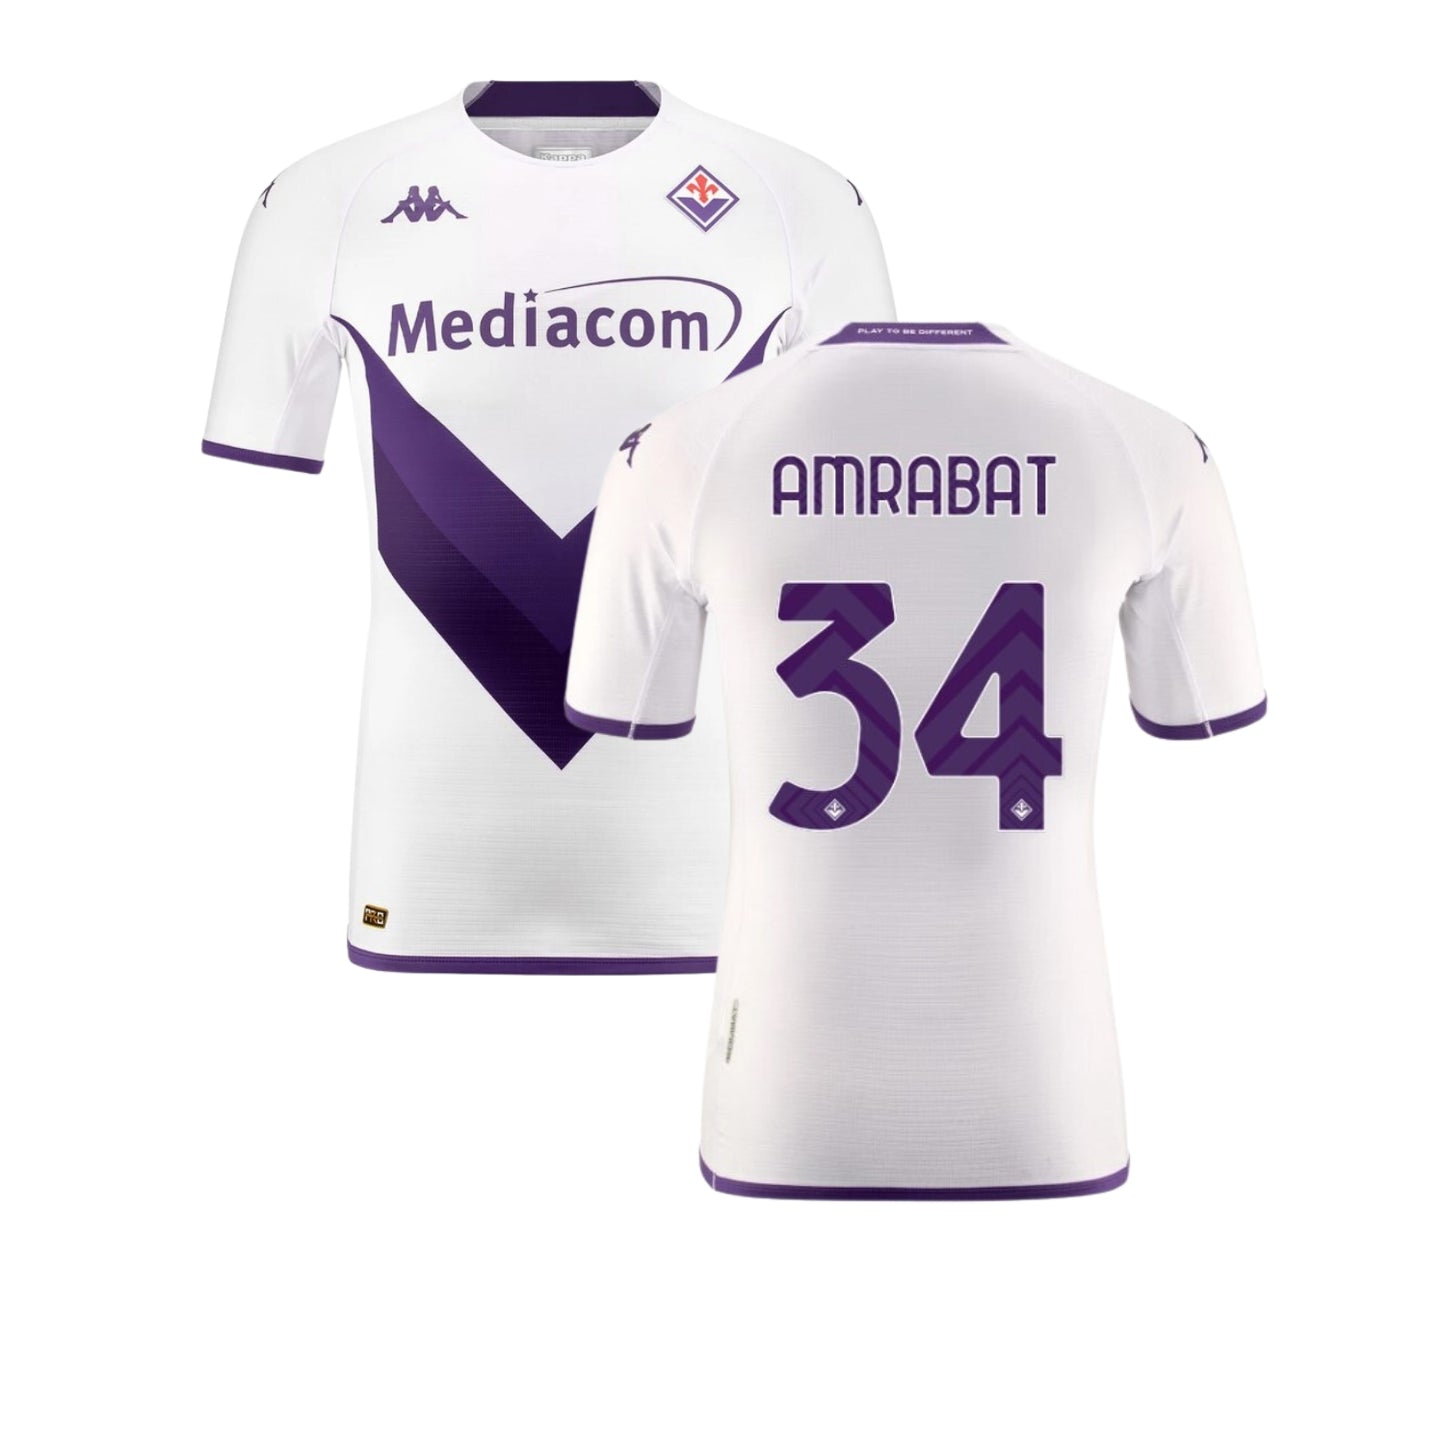 Sofyan Amrabat ACF Fiorentina 34 Jersey